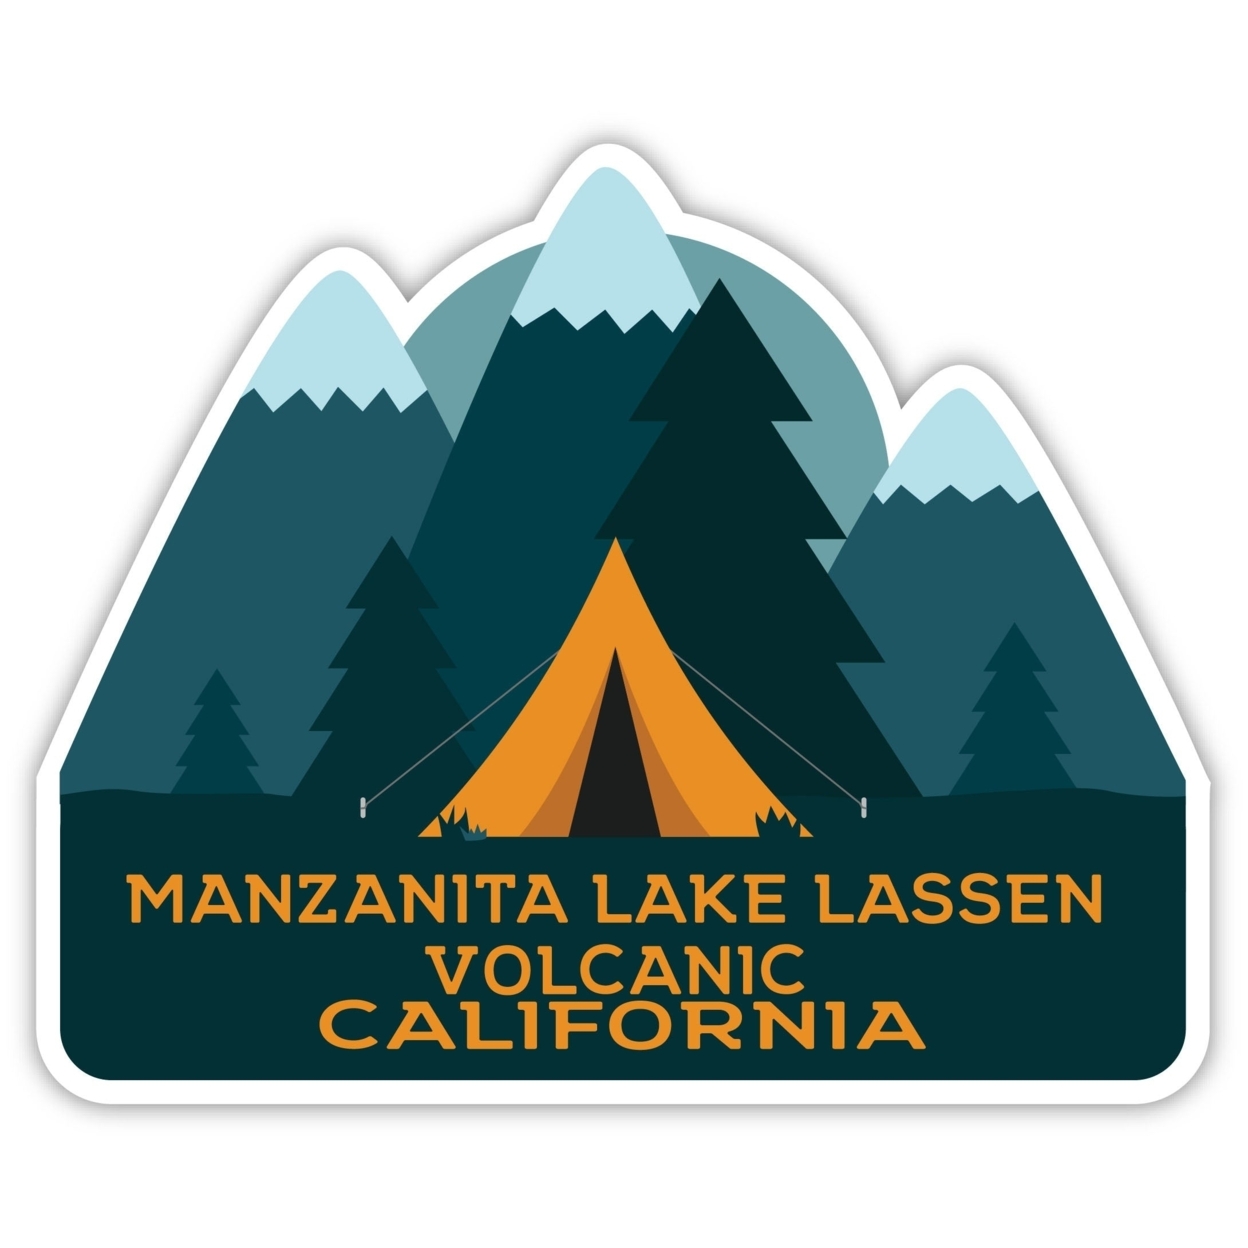 Manzanita Lake Lassen Volcanic California Souvenir Decorative Stickers (Choose Theme And Size) - 2-Inch, Tent